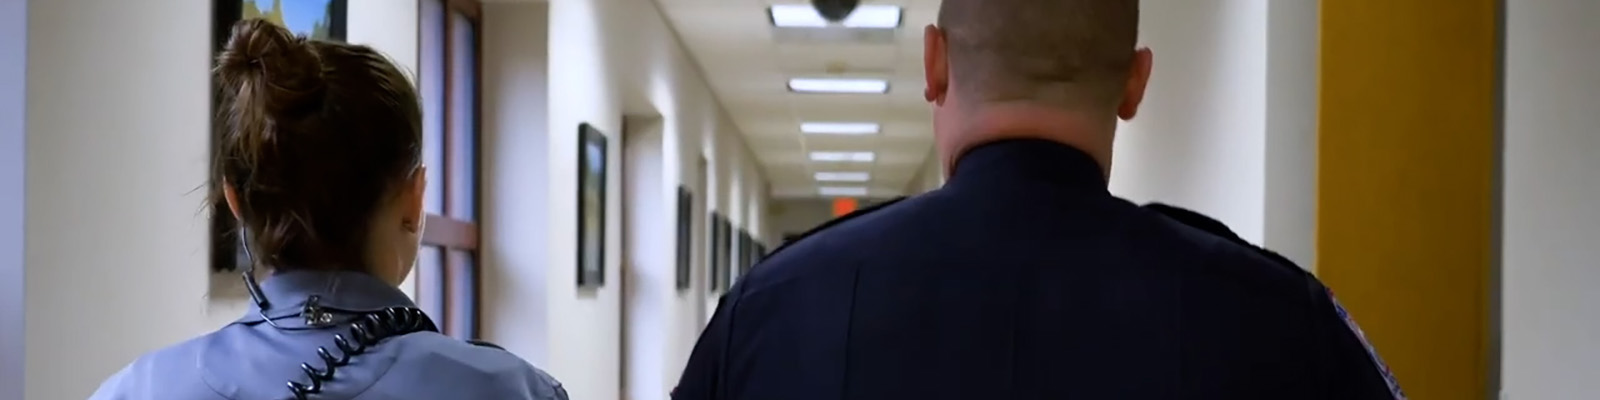 Officers walking in a hallway